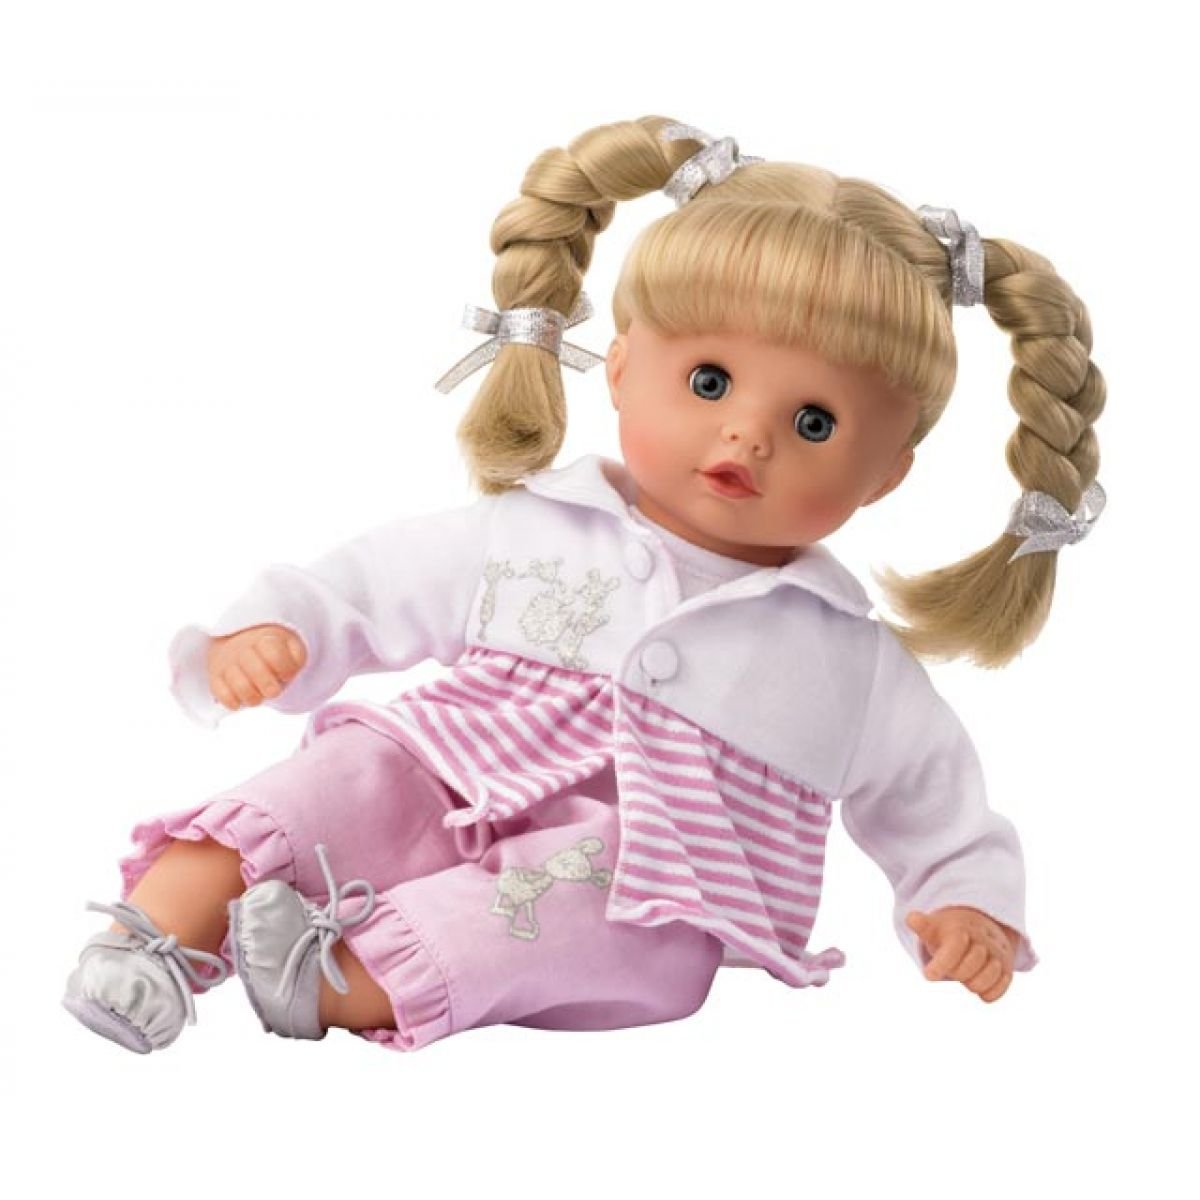 Doll картинка. Игрушки и куклы. Кукла детская. Кукла на белом фоне. Игрушки для детей куклы.